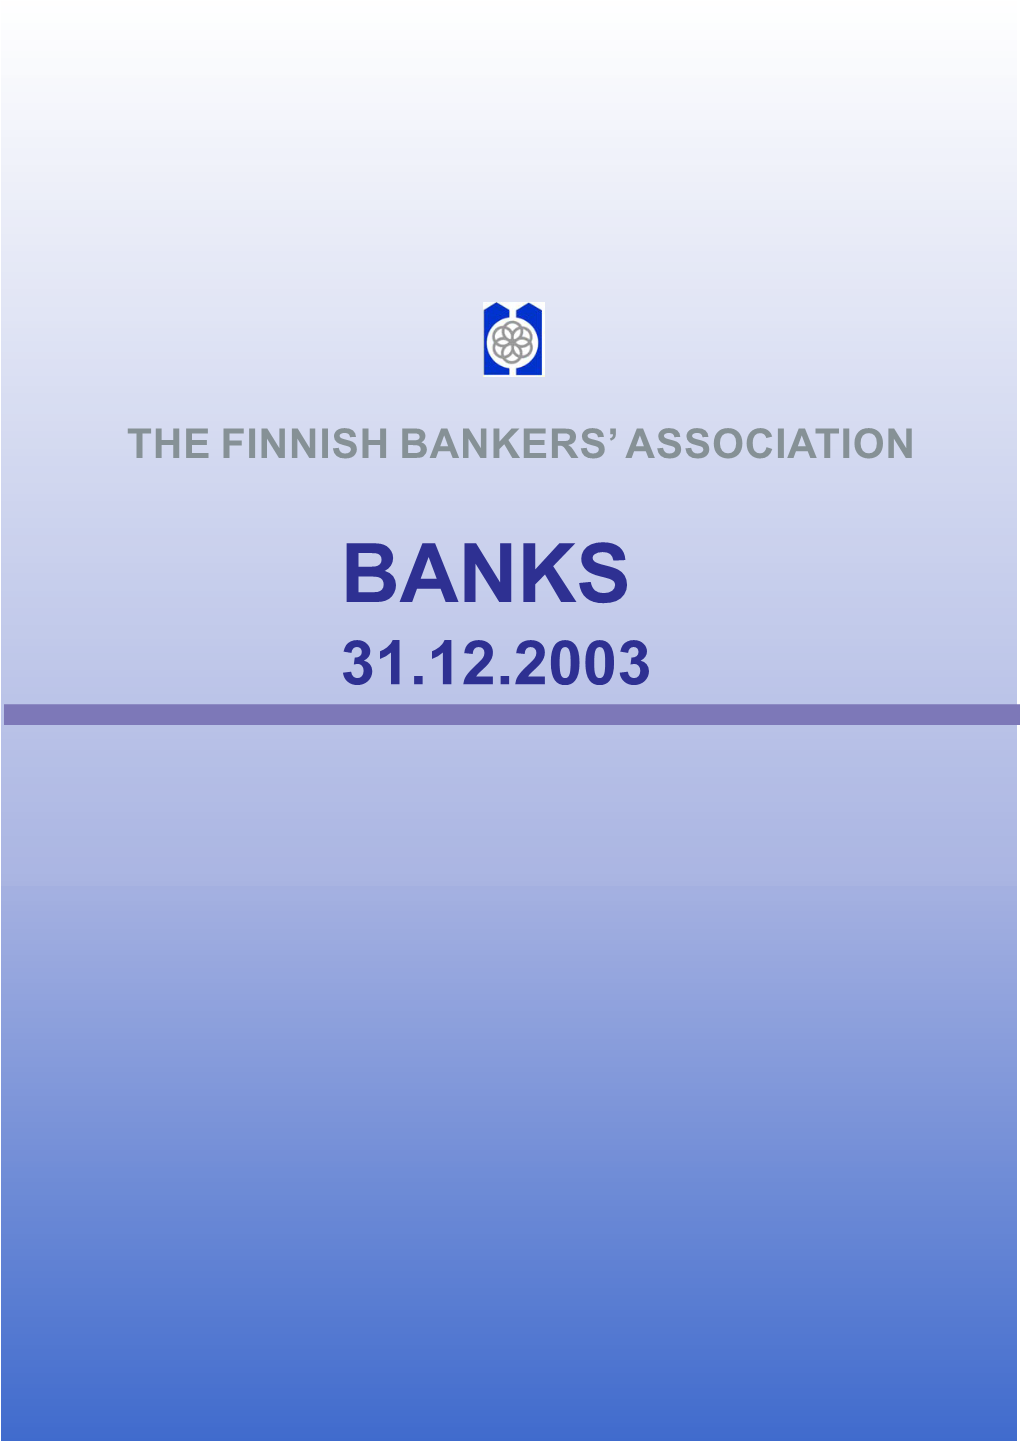 THE FINNISH BANKERS' ASSOCIATION Museokatu 8 a P.O